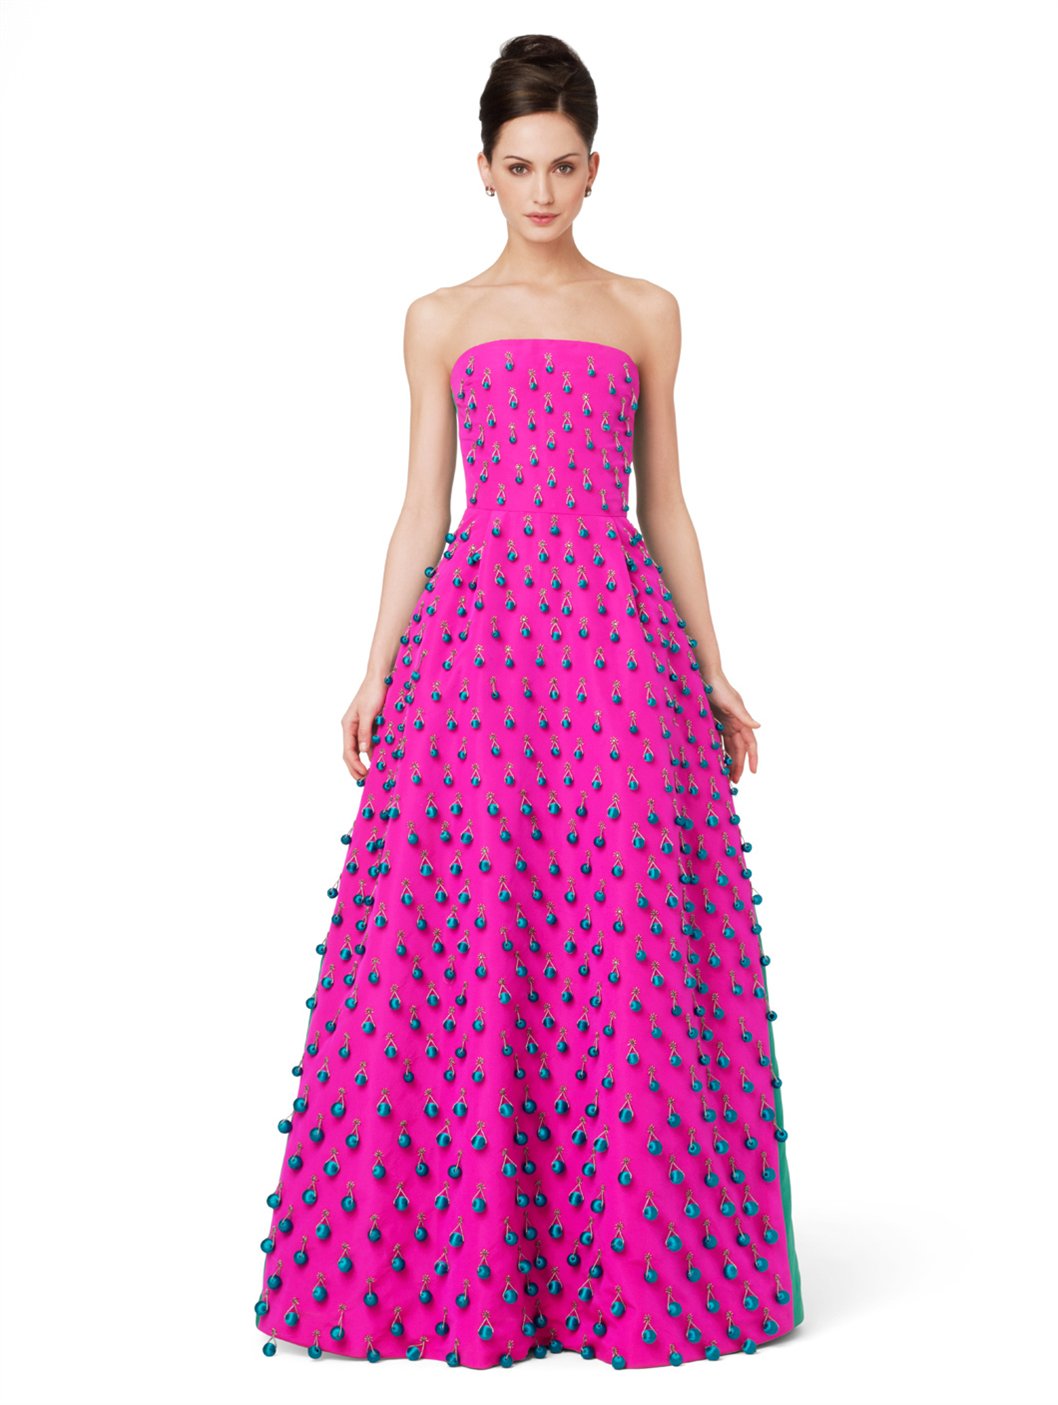 Lyst - Oscar de la renta Strapless Ball Gown with Tassel Embroidery in ...